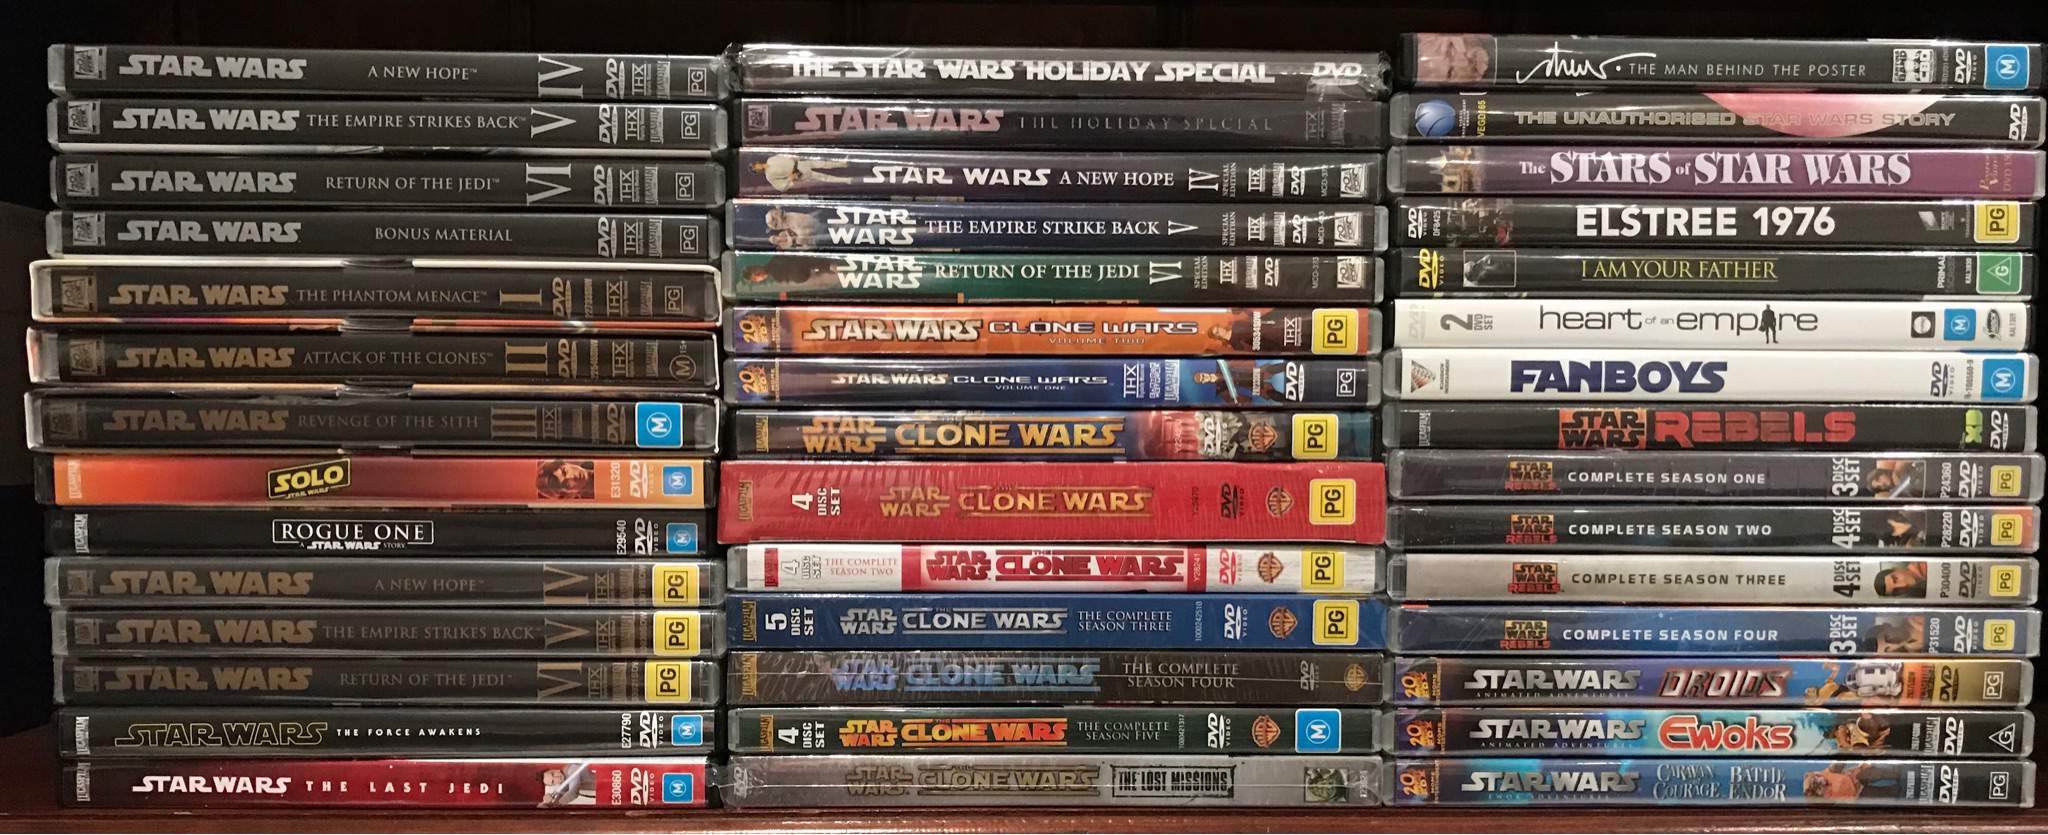 star wars dvd box set